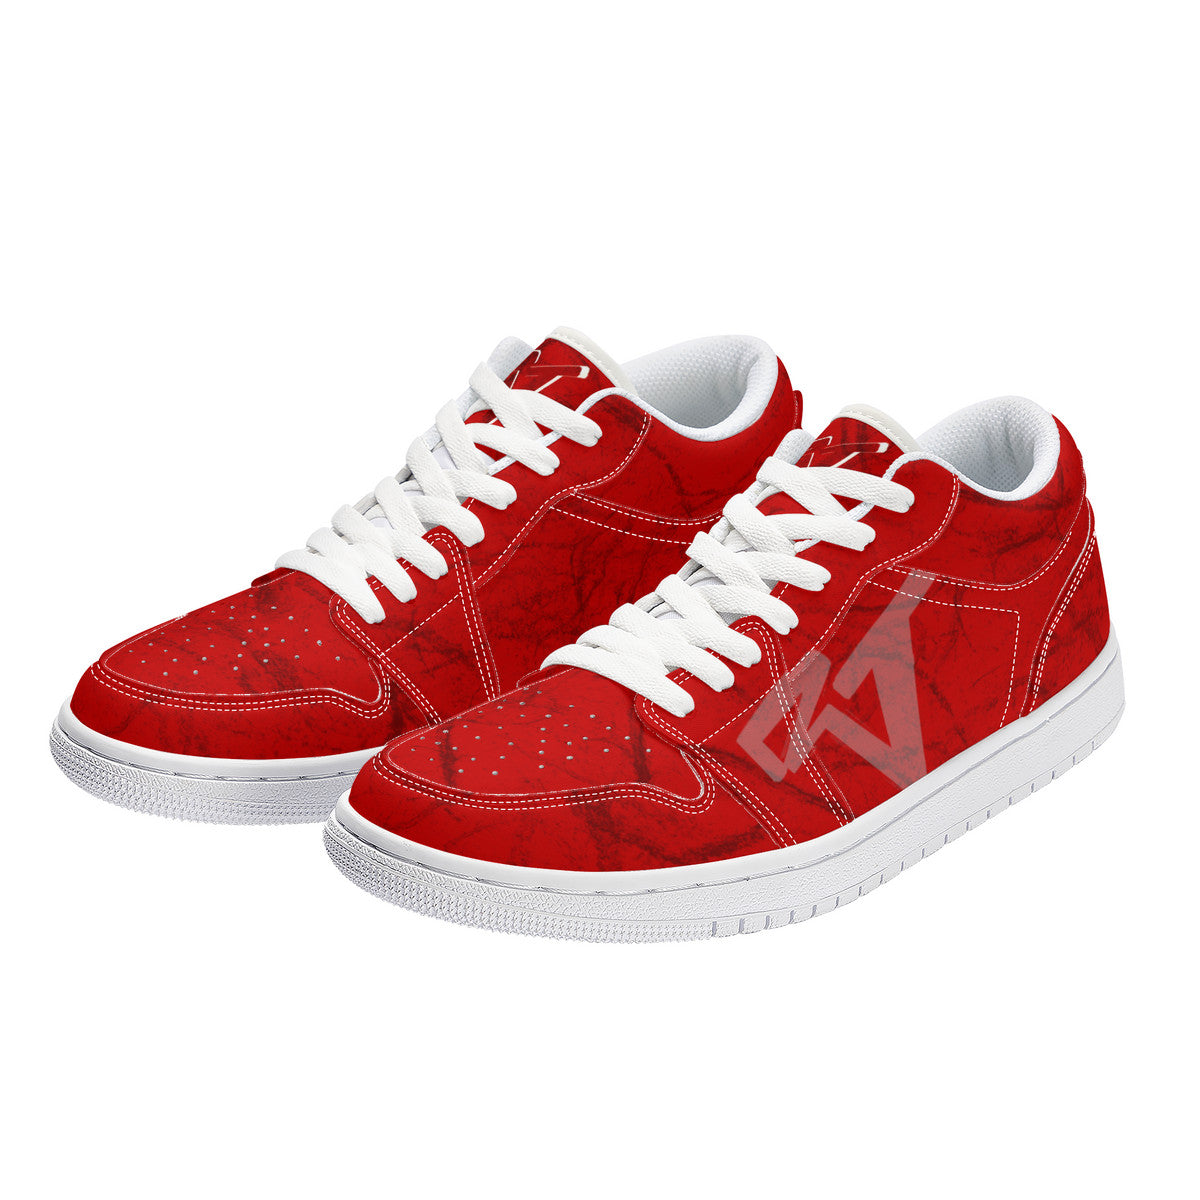 RVT Brand Unisex Low Top Skateboard Sneakers_Red